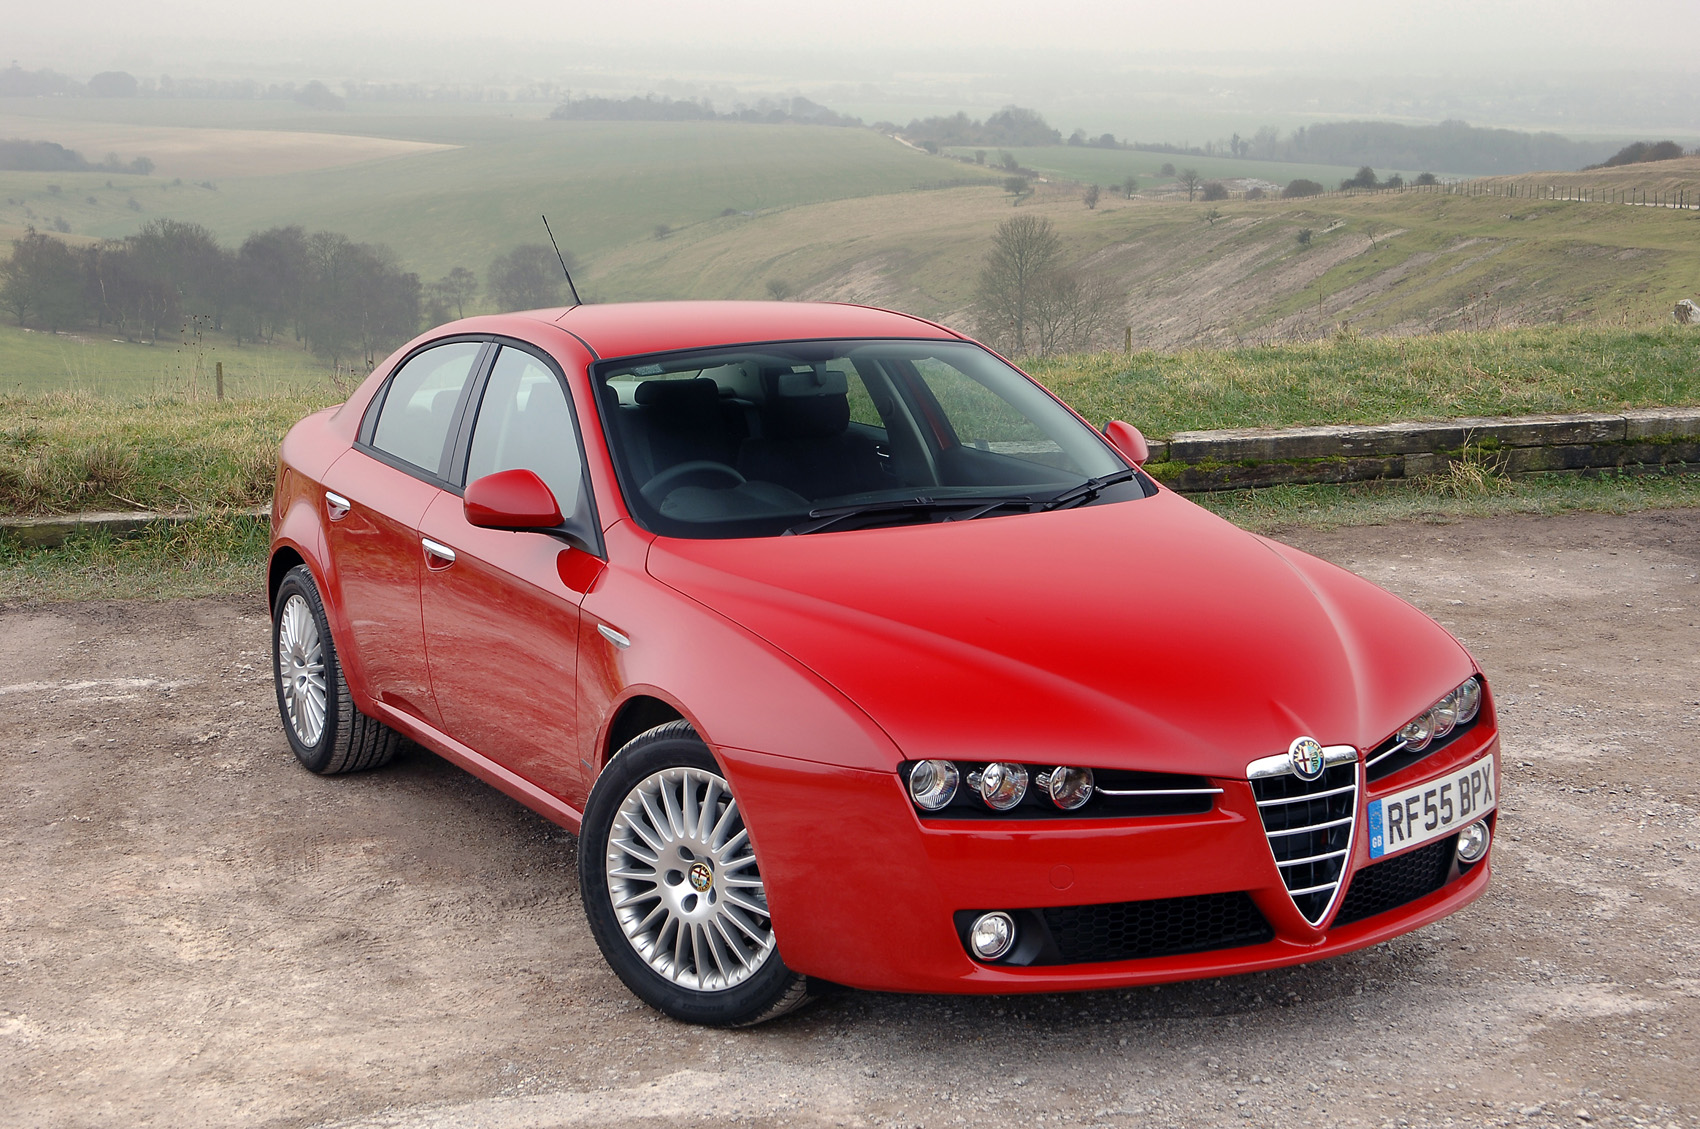 Used Alfa Romeo 159 2006-2011 review